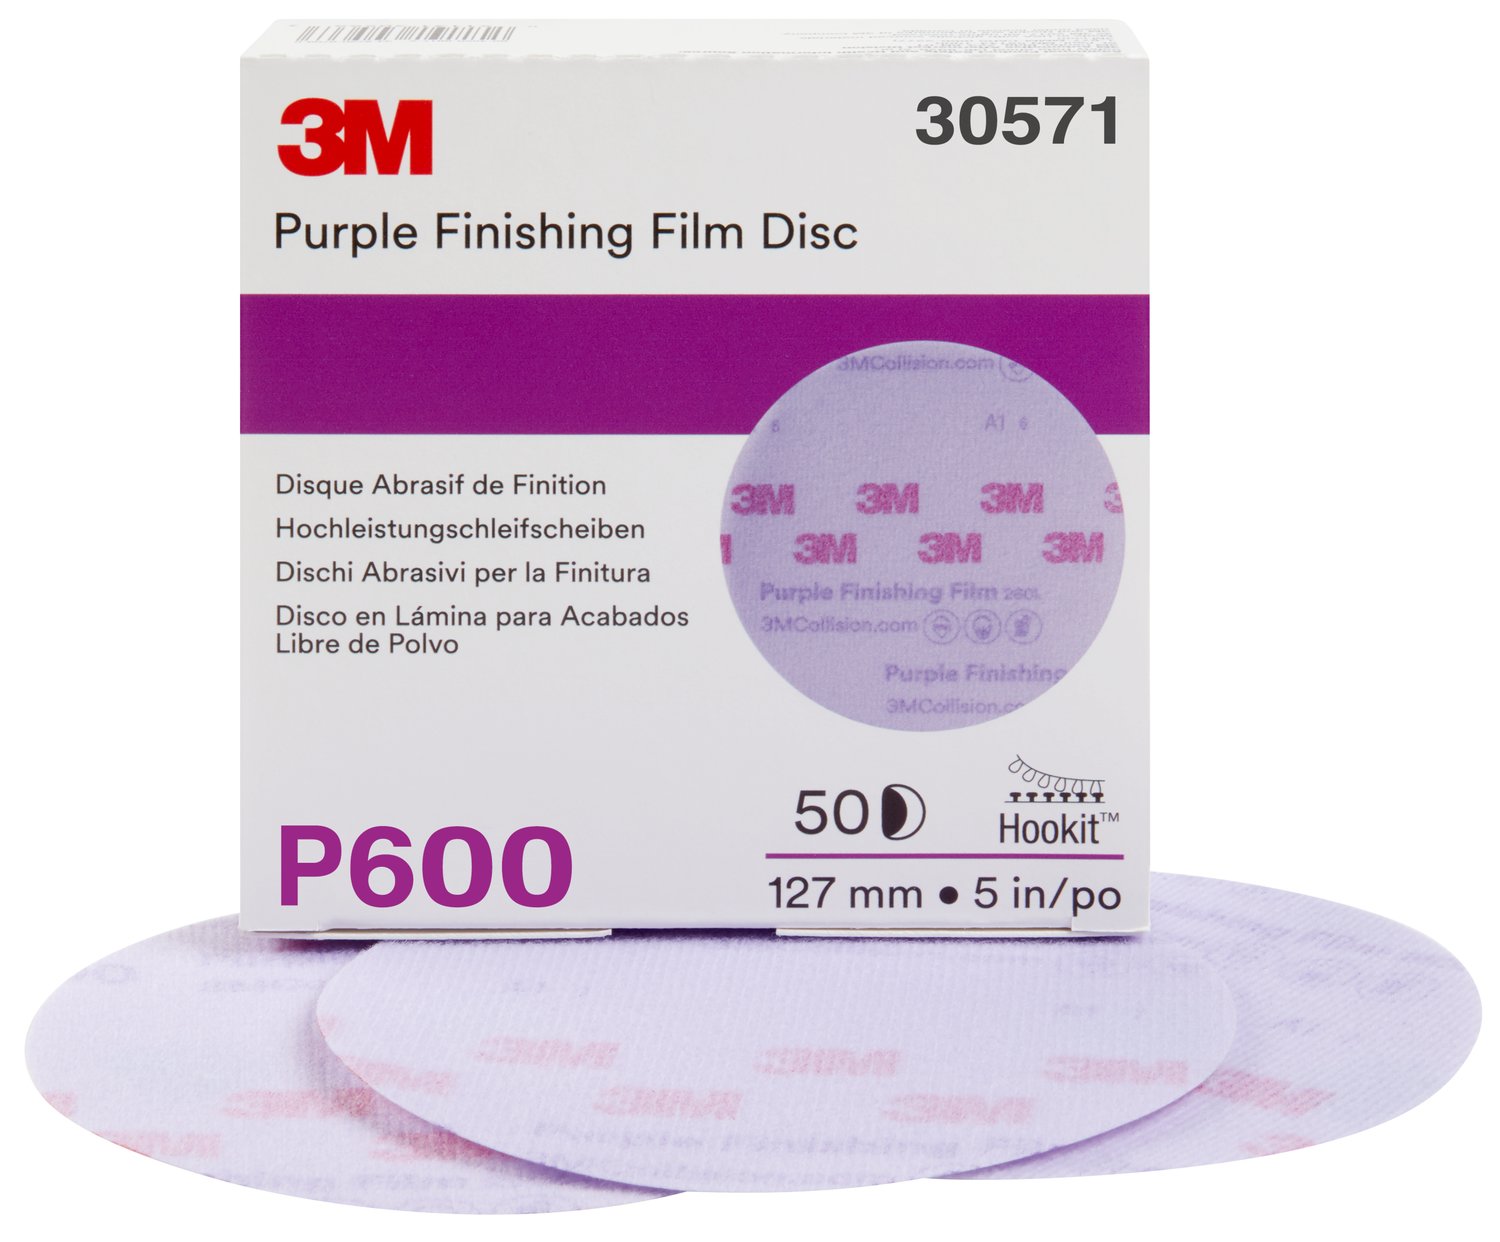 7100122801 - 3M Hookit Purple Finishing Film Abrasive Disc 260L, 30571, 5 in, P600,
50 discs per carton, 4 cartons per case